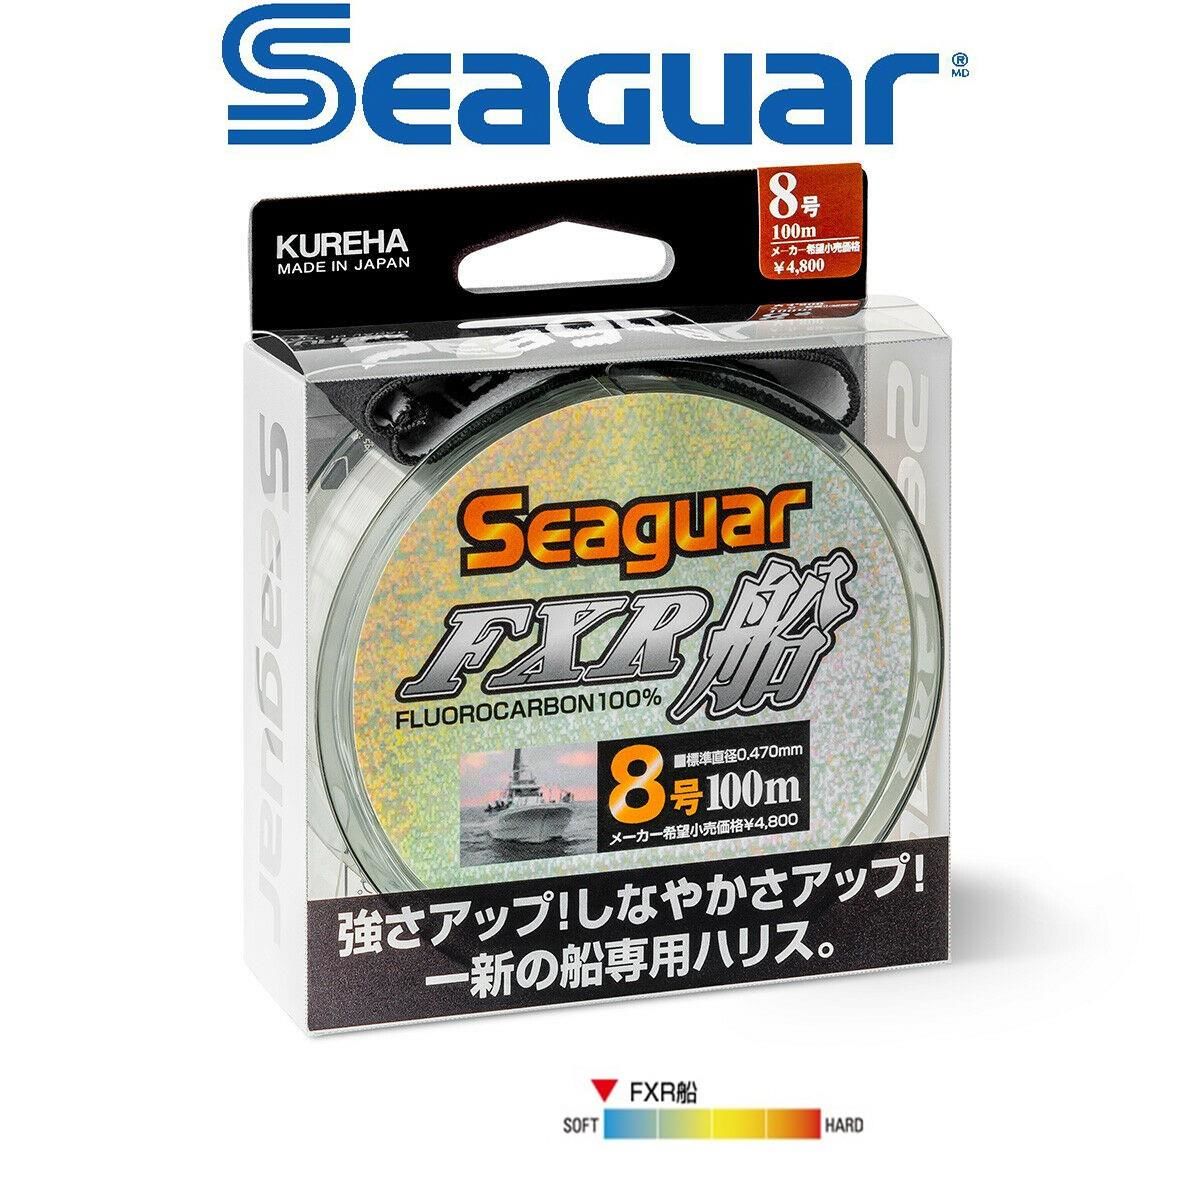 Seaguar Fxr Fune %100 F.C. 100mt 20 - 0.740 mm